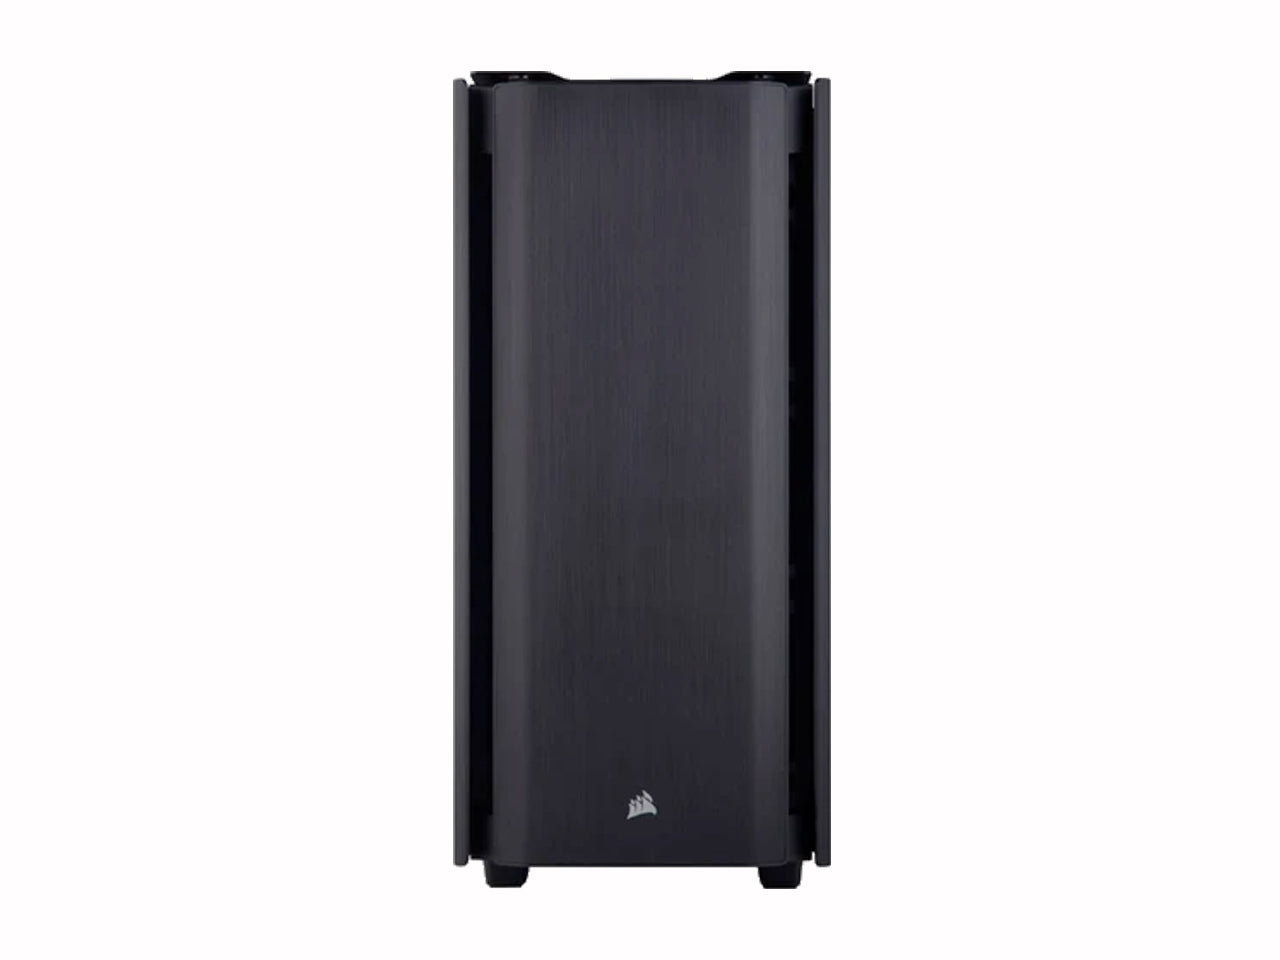 CORSAIR Obsidian Series® 500D Premium Mid-Tower (Case) Cabinet